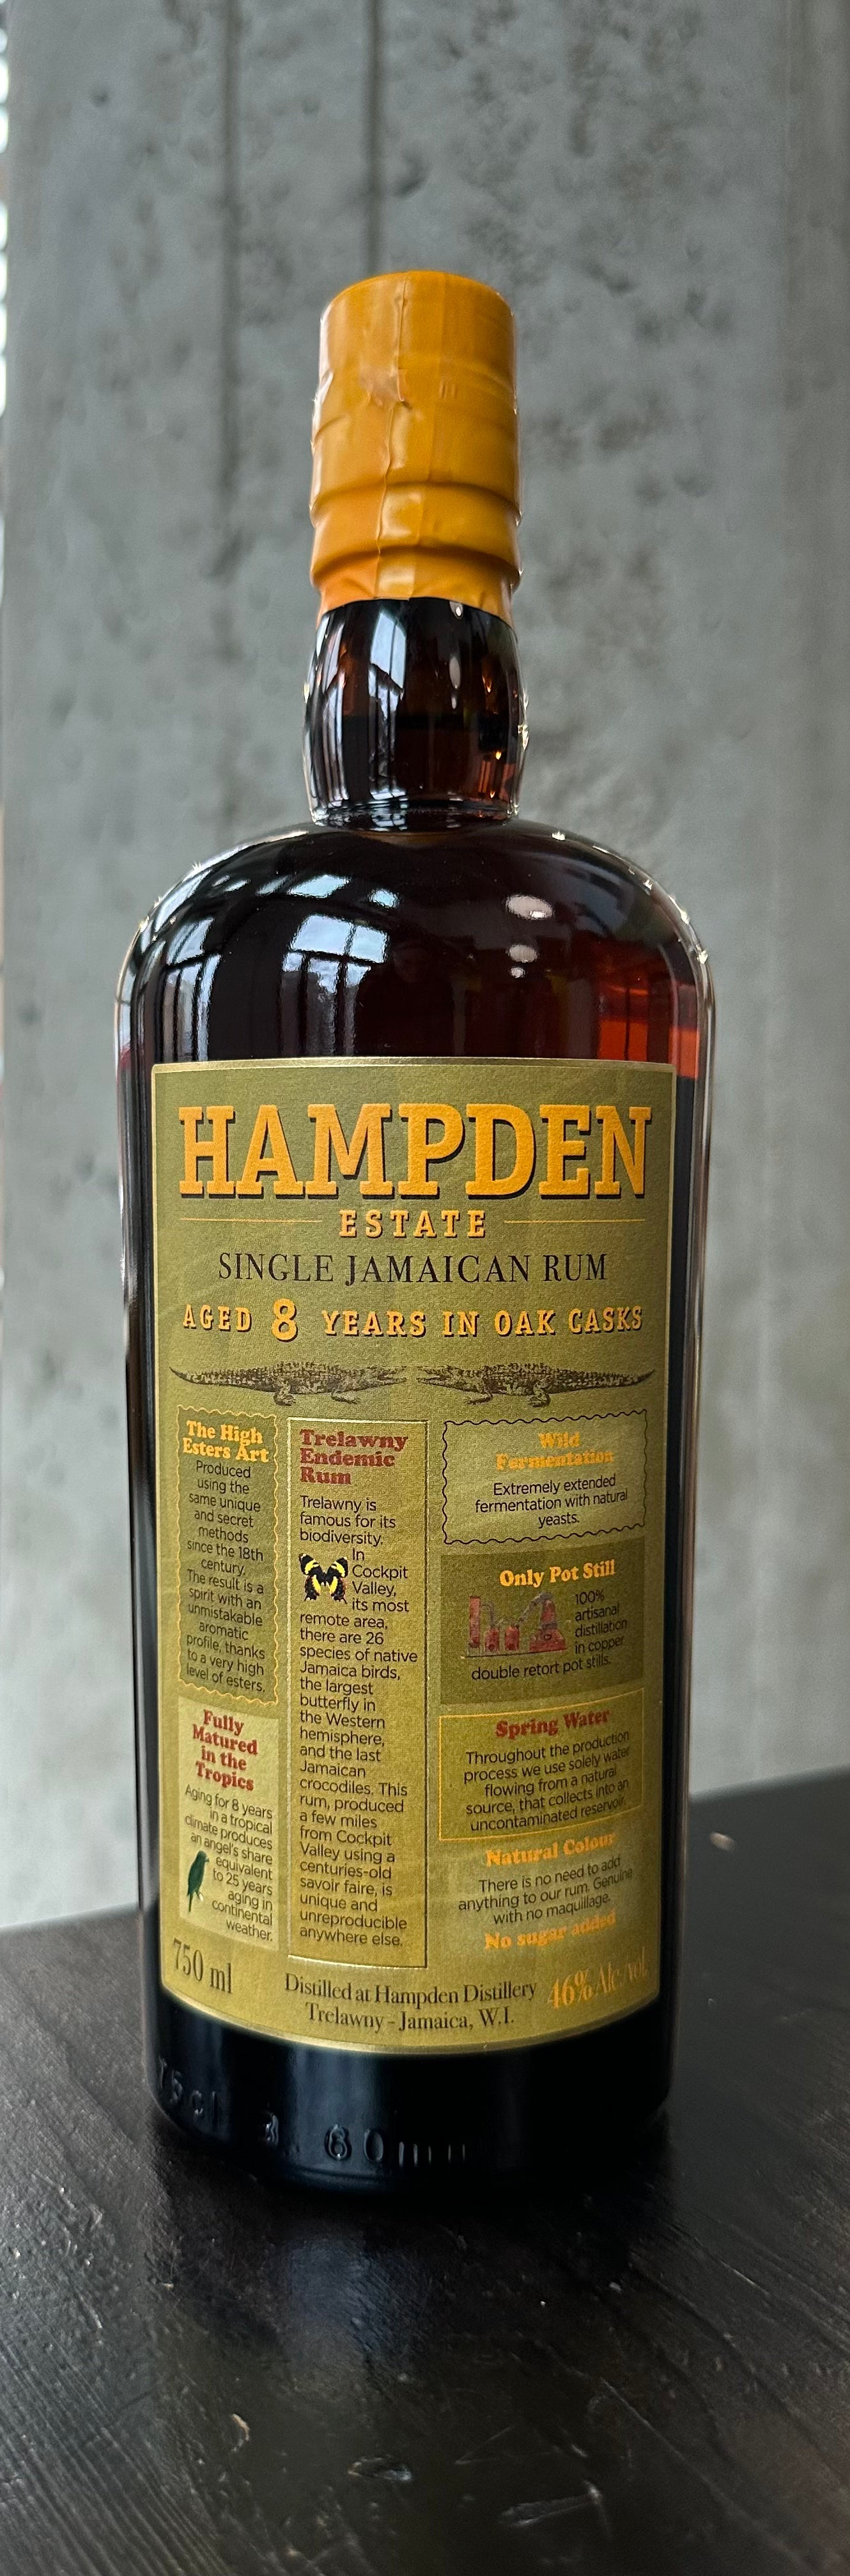 Hampden Estate "8 Year" Single Jamaican Rum